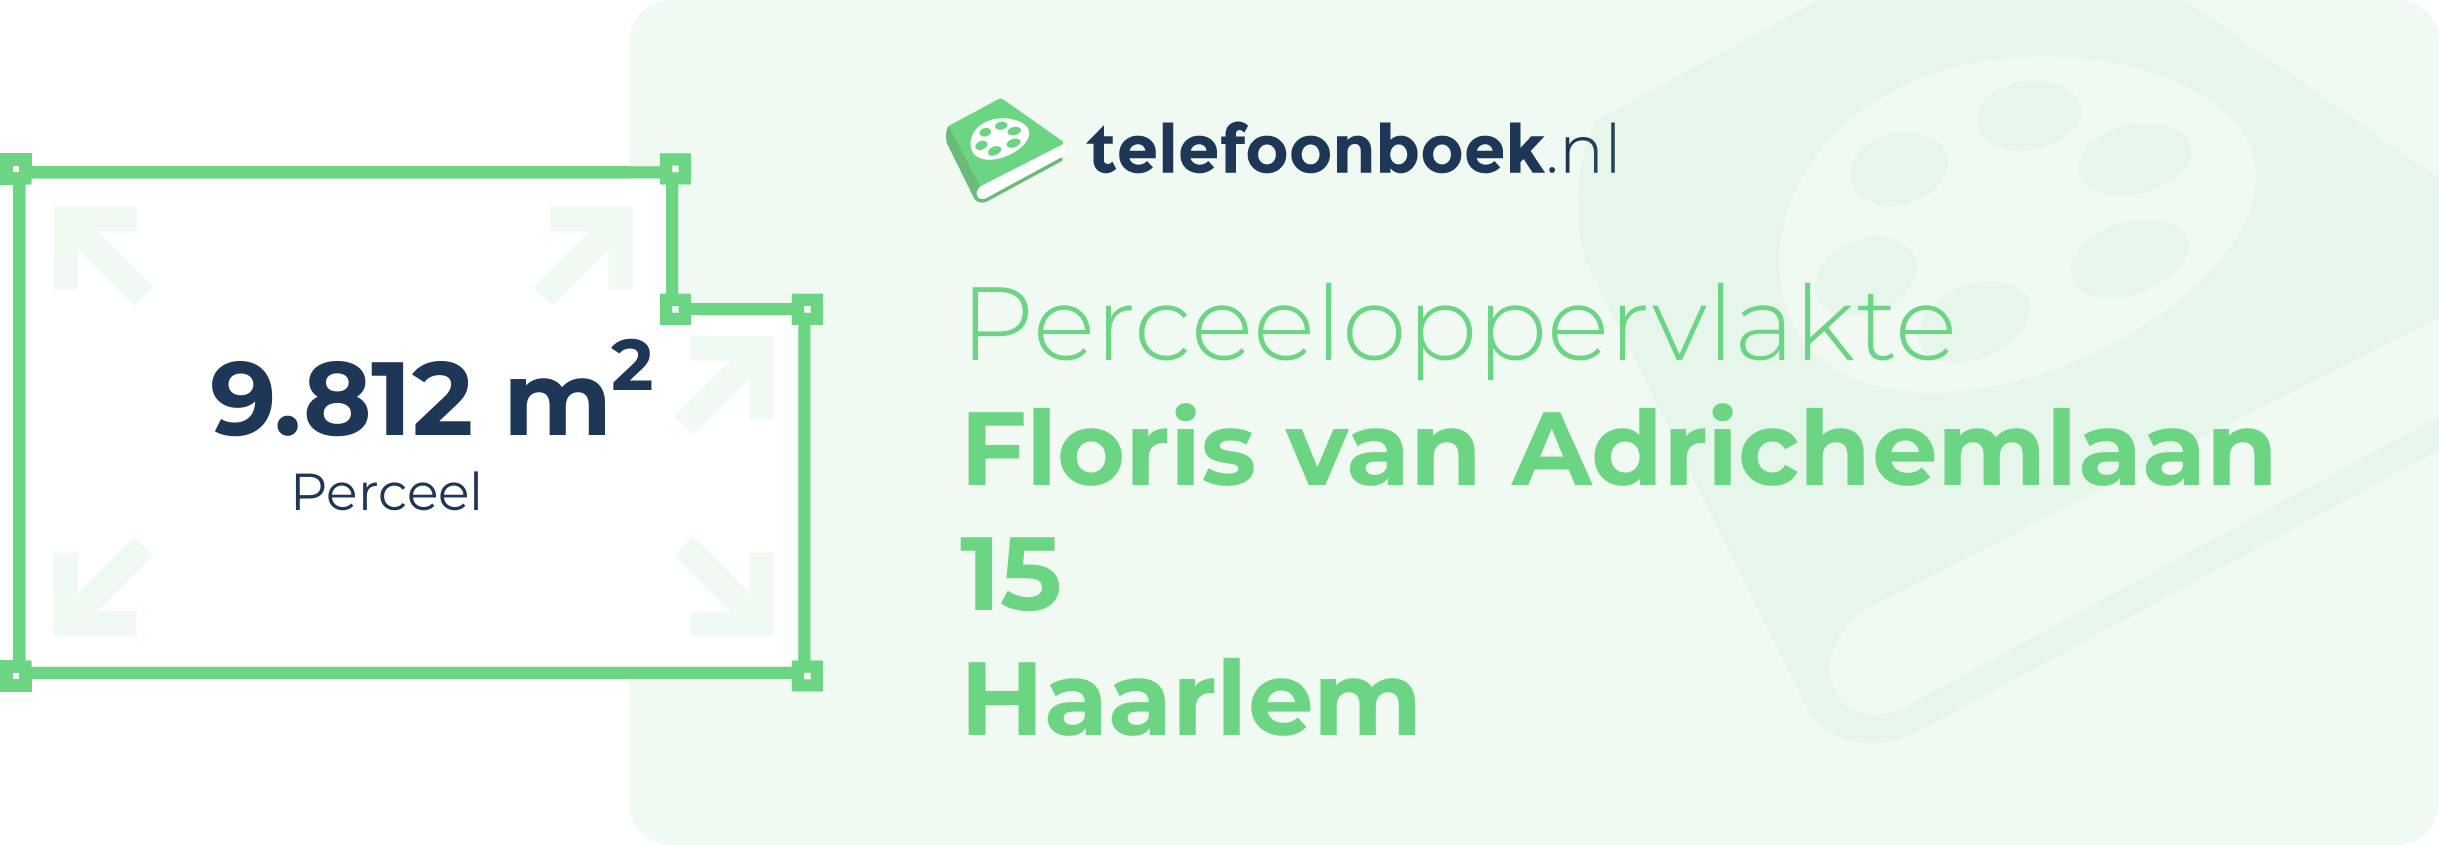 Perceeloppervlakte Floris Van Adrichemlaan 15 Haarlem